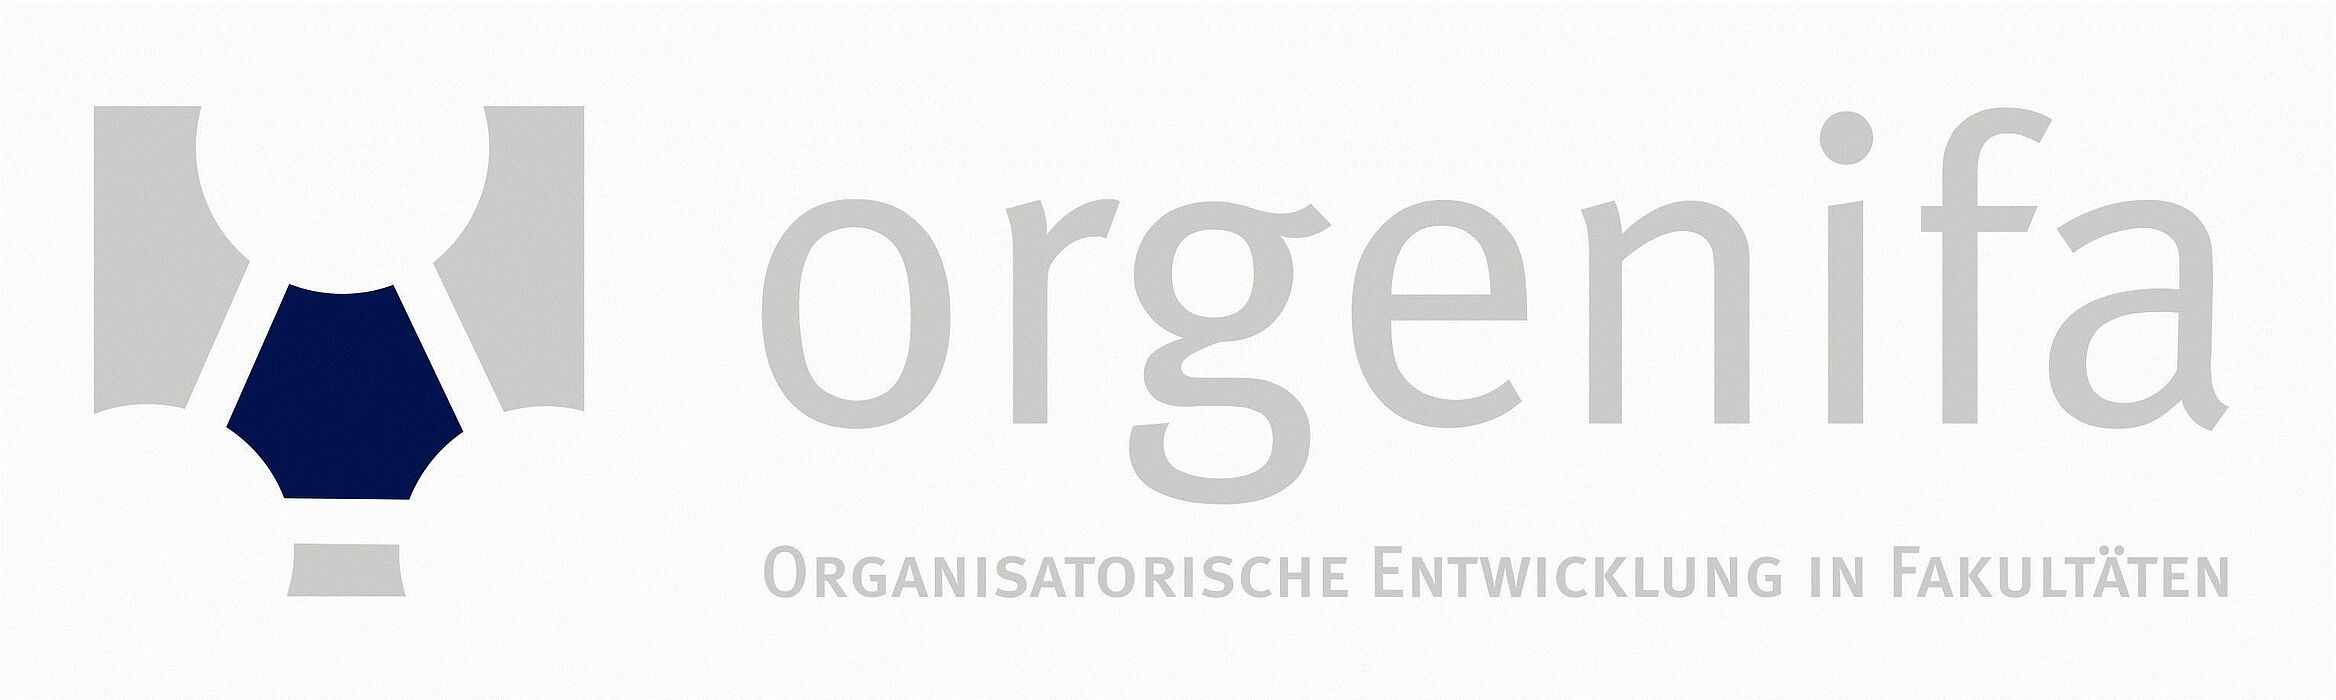 Abbildung: Logo OrgEniFa